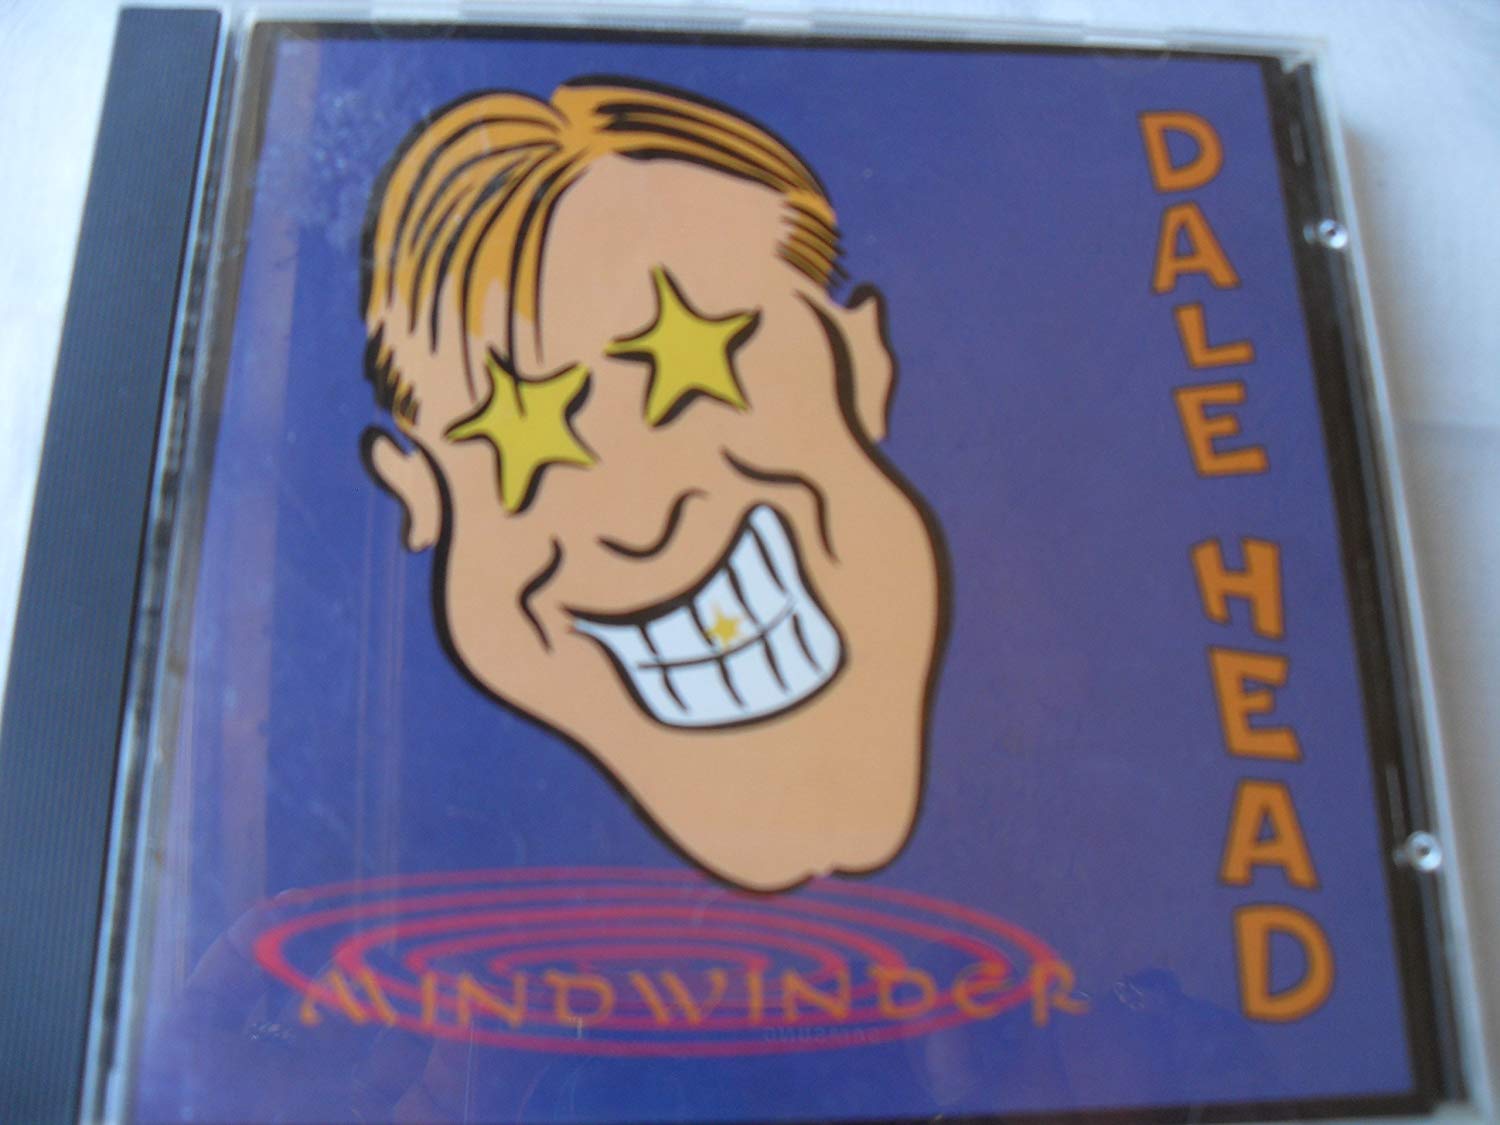 DALE HEAD - Mindwinder cover 